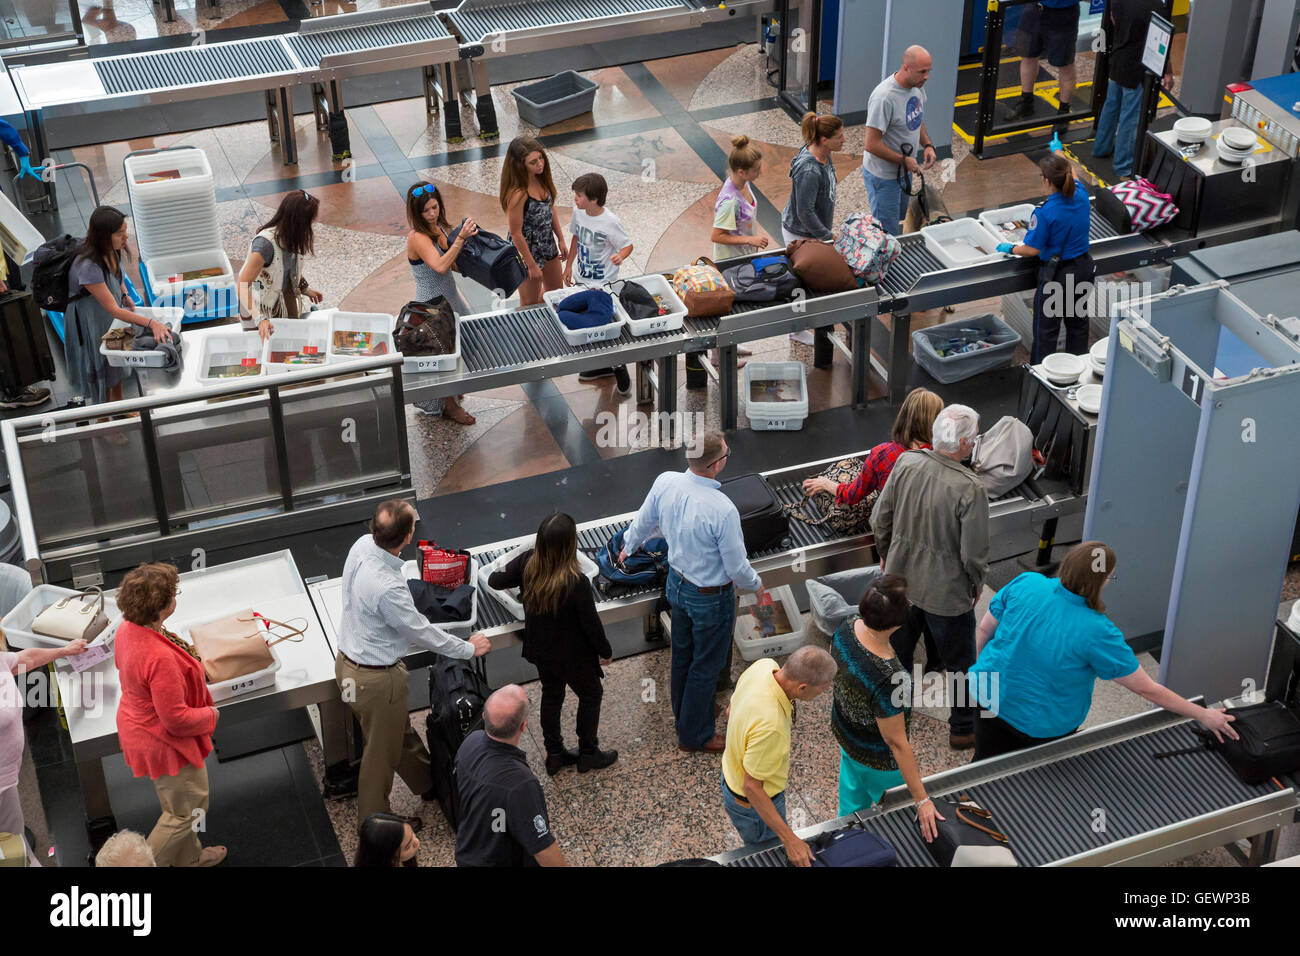 Denver, Colorado - Security screening of passengers at Denver International Airport. Stock Photo